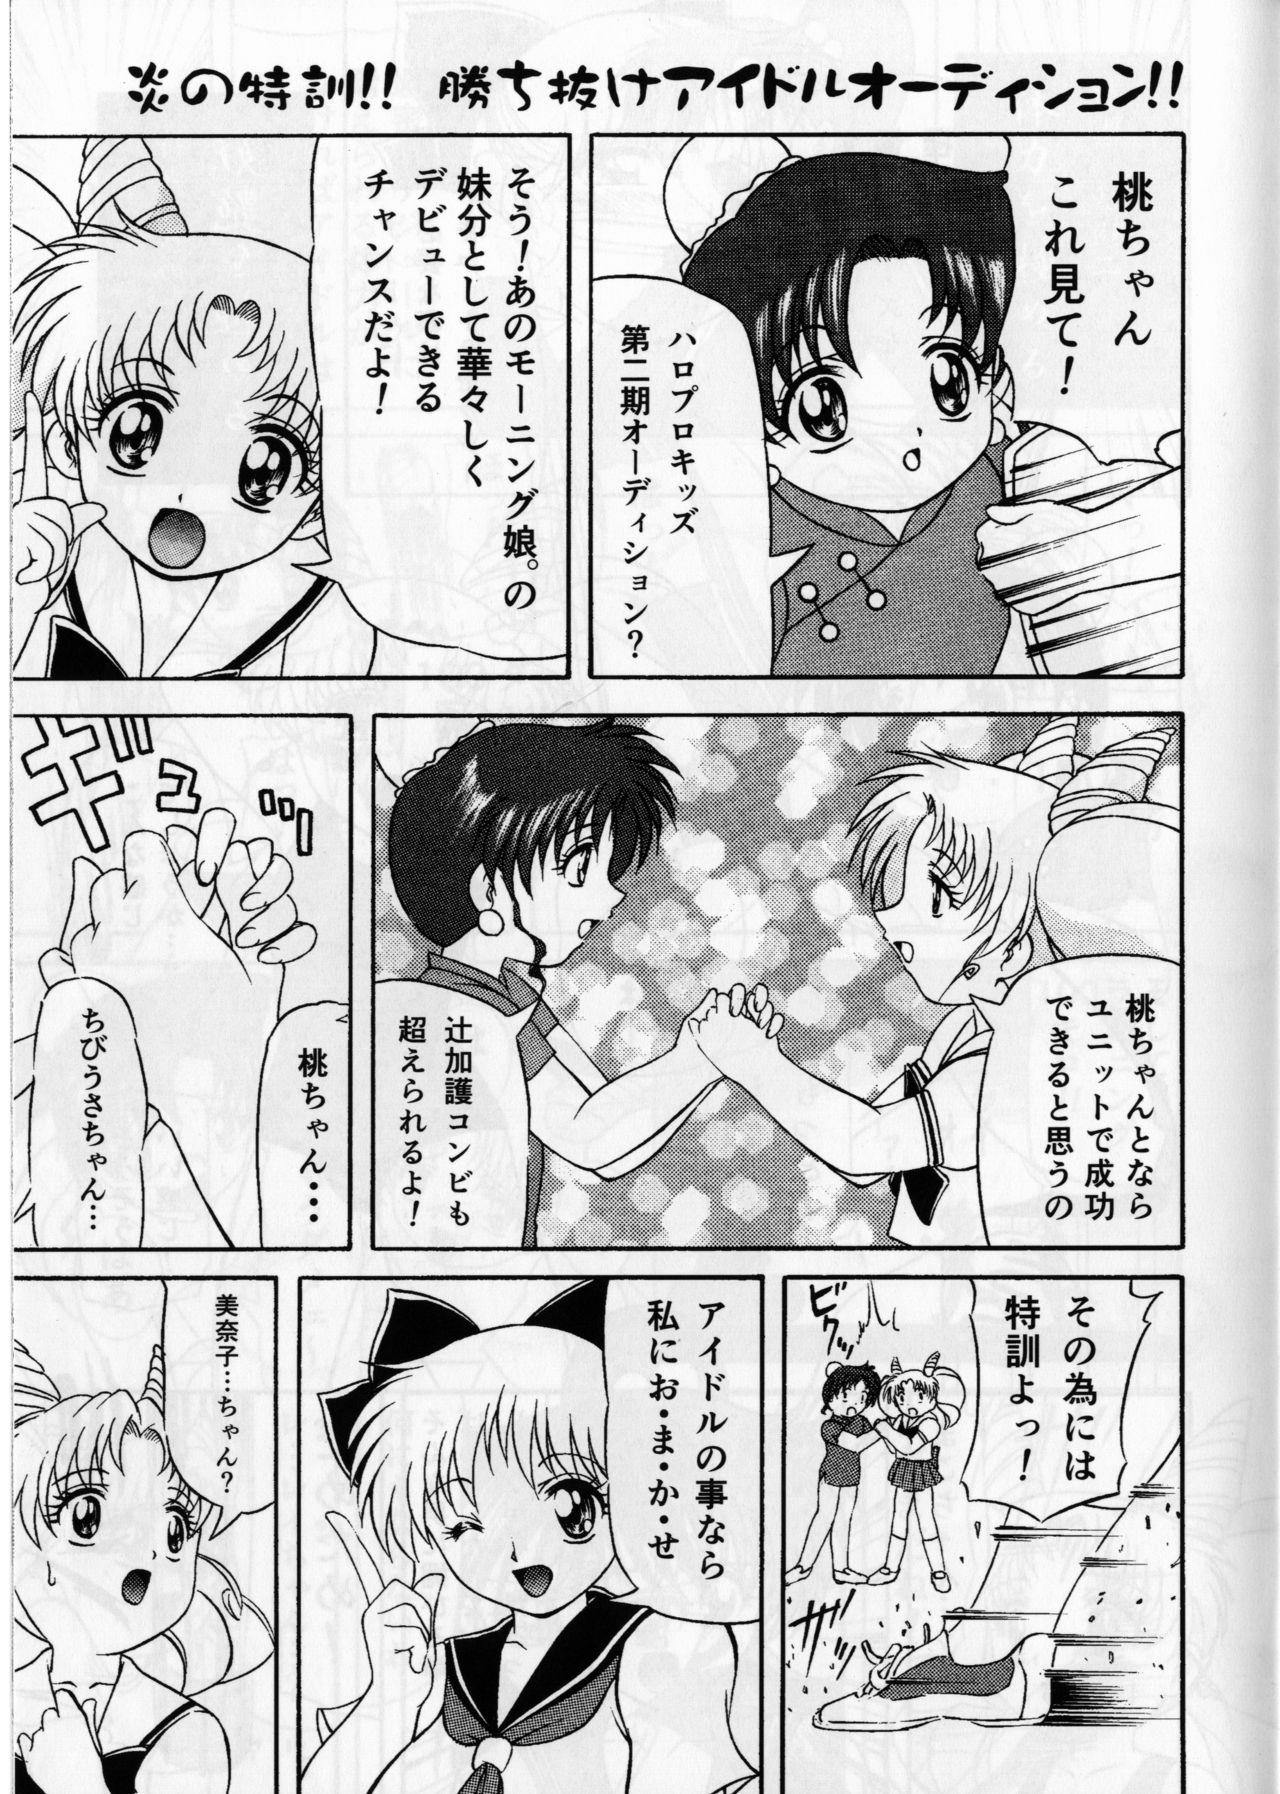 Tongue Pink Sugar 20th Anniversary Special - Sailor moon Masseur - Page 7